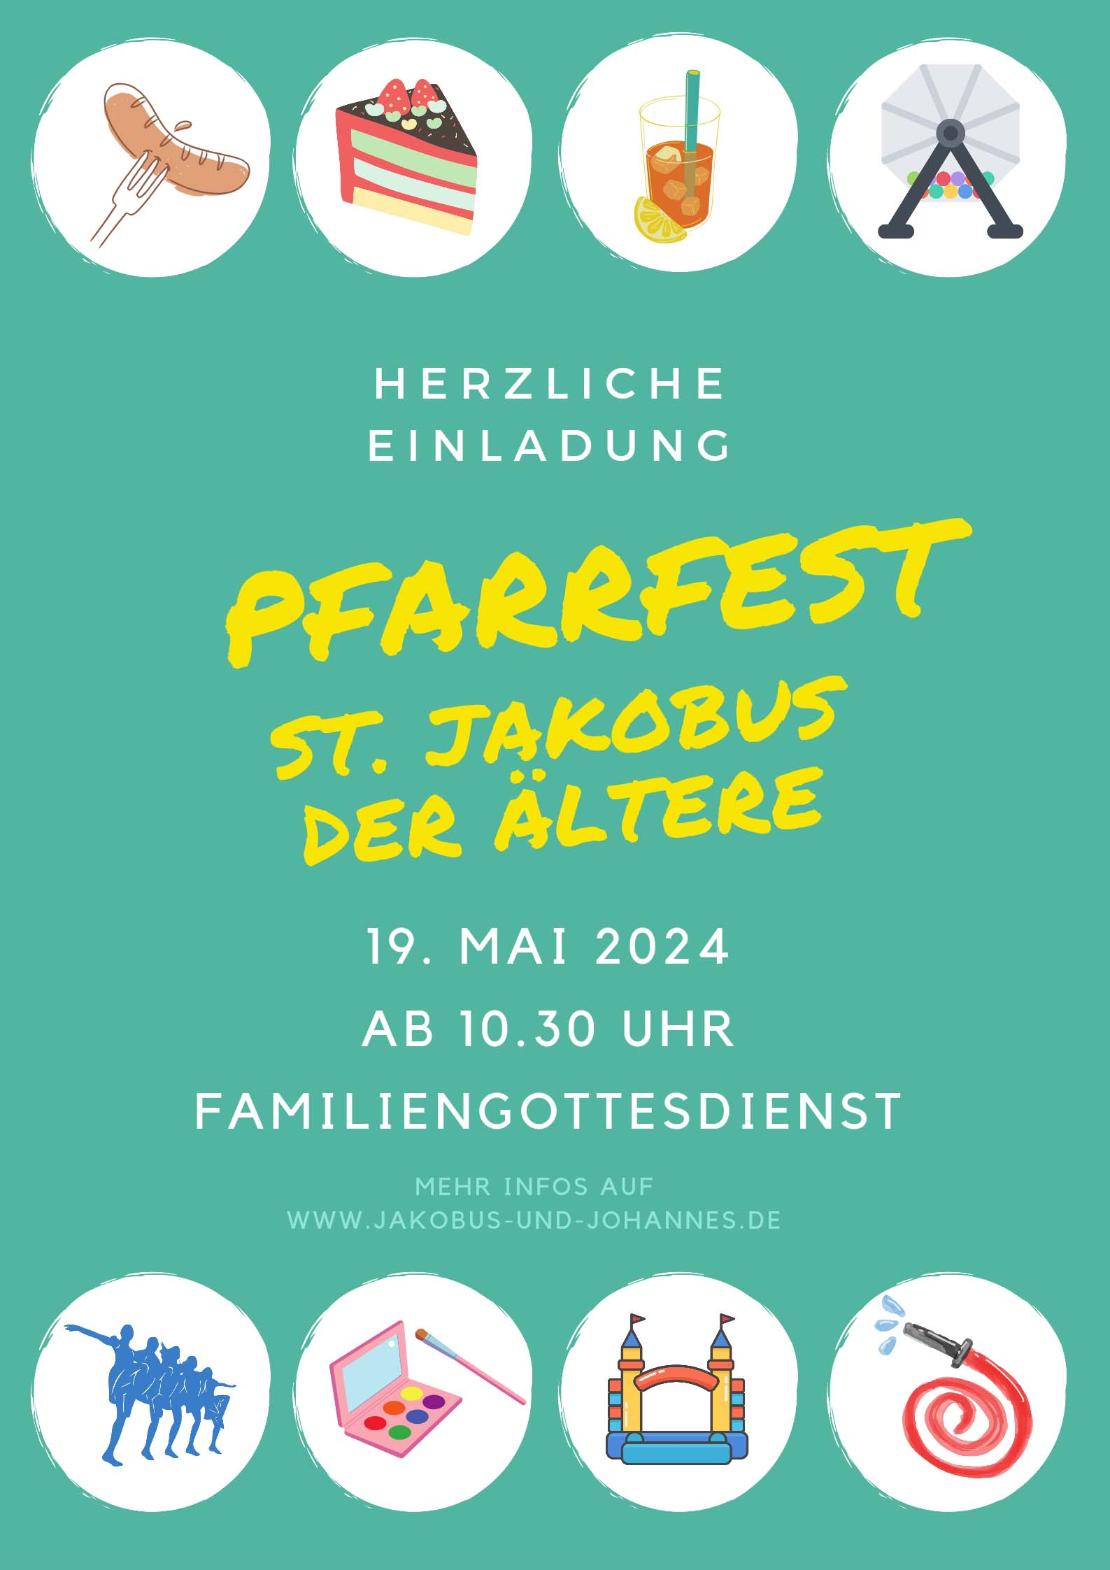 Plakat Pfarrfest 2024 in Nauheim St. Jakobus (c) Pfarrgemeinde St. Jakobus Nauheim